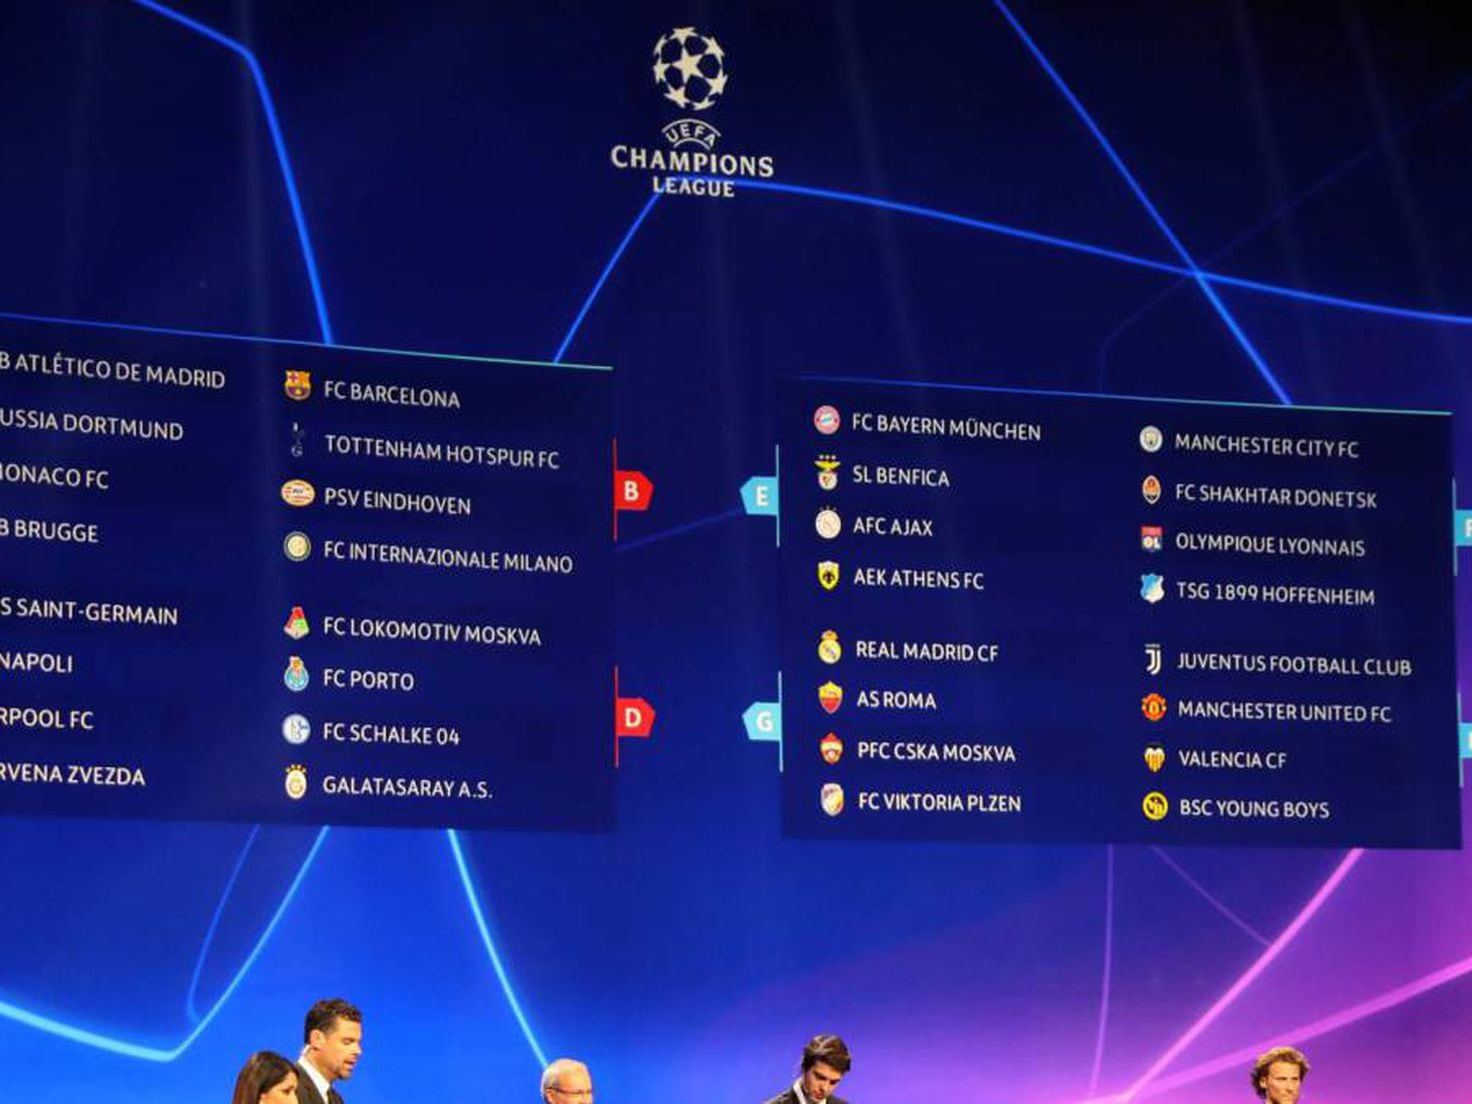 Uefa Champions League 2018/19 groups and award winners - AS USA